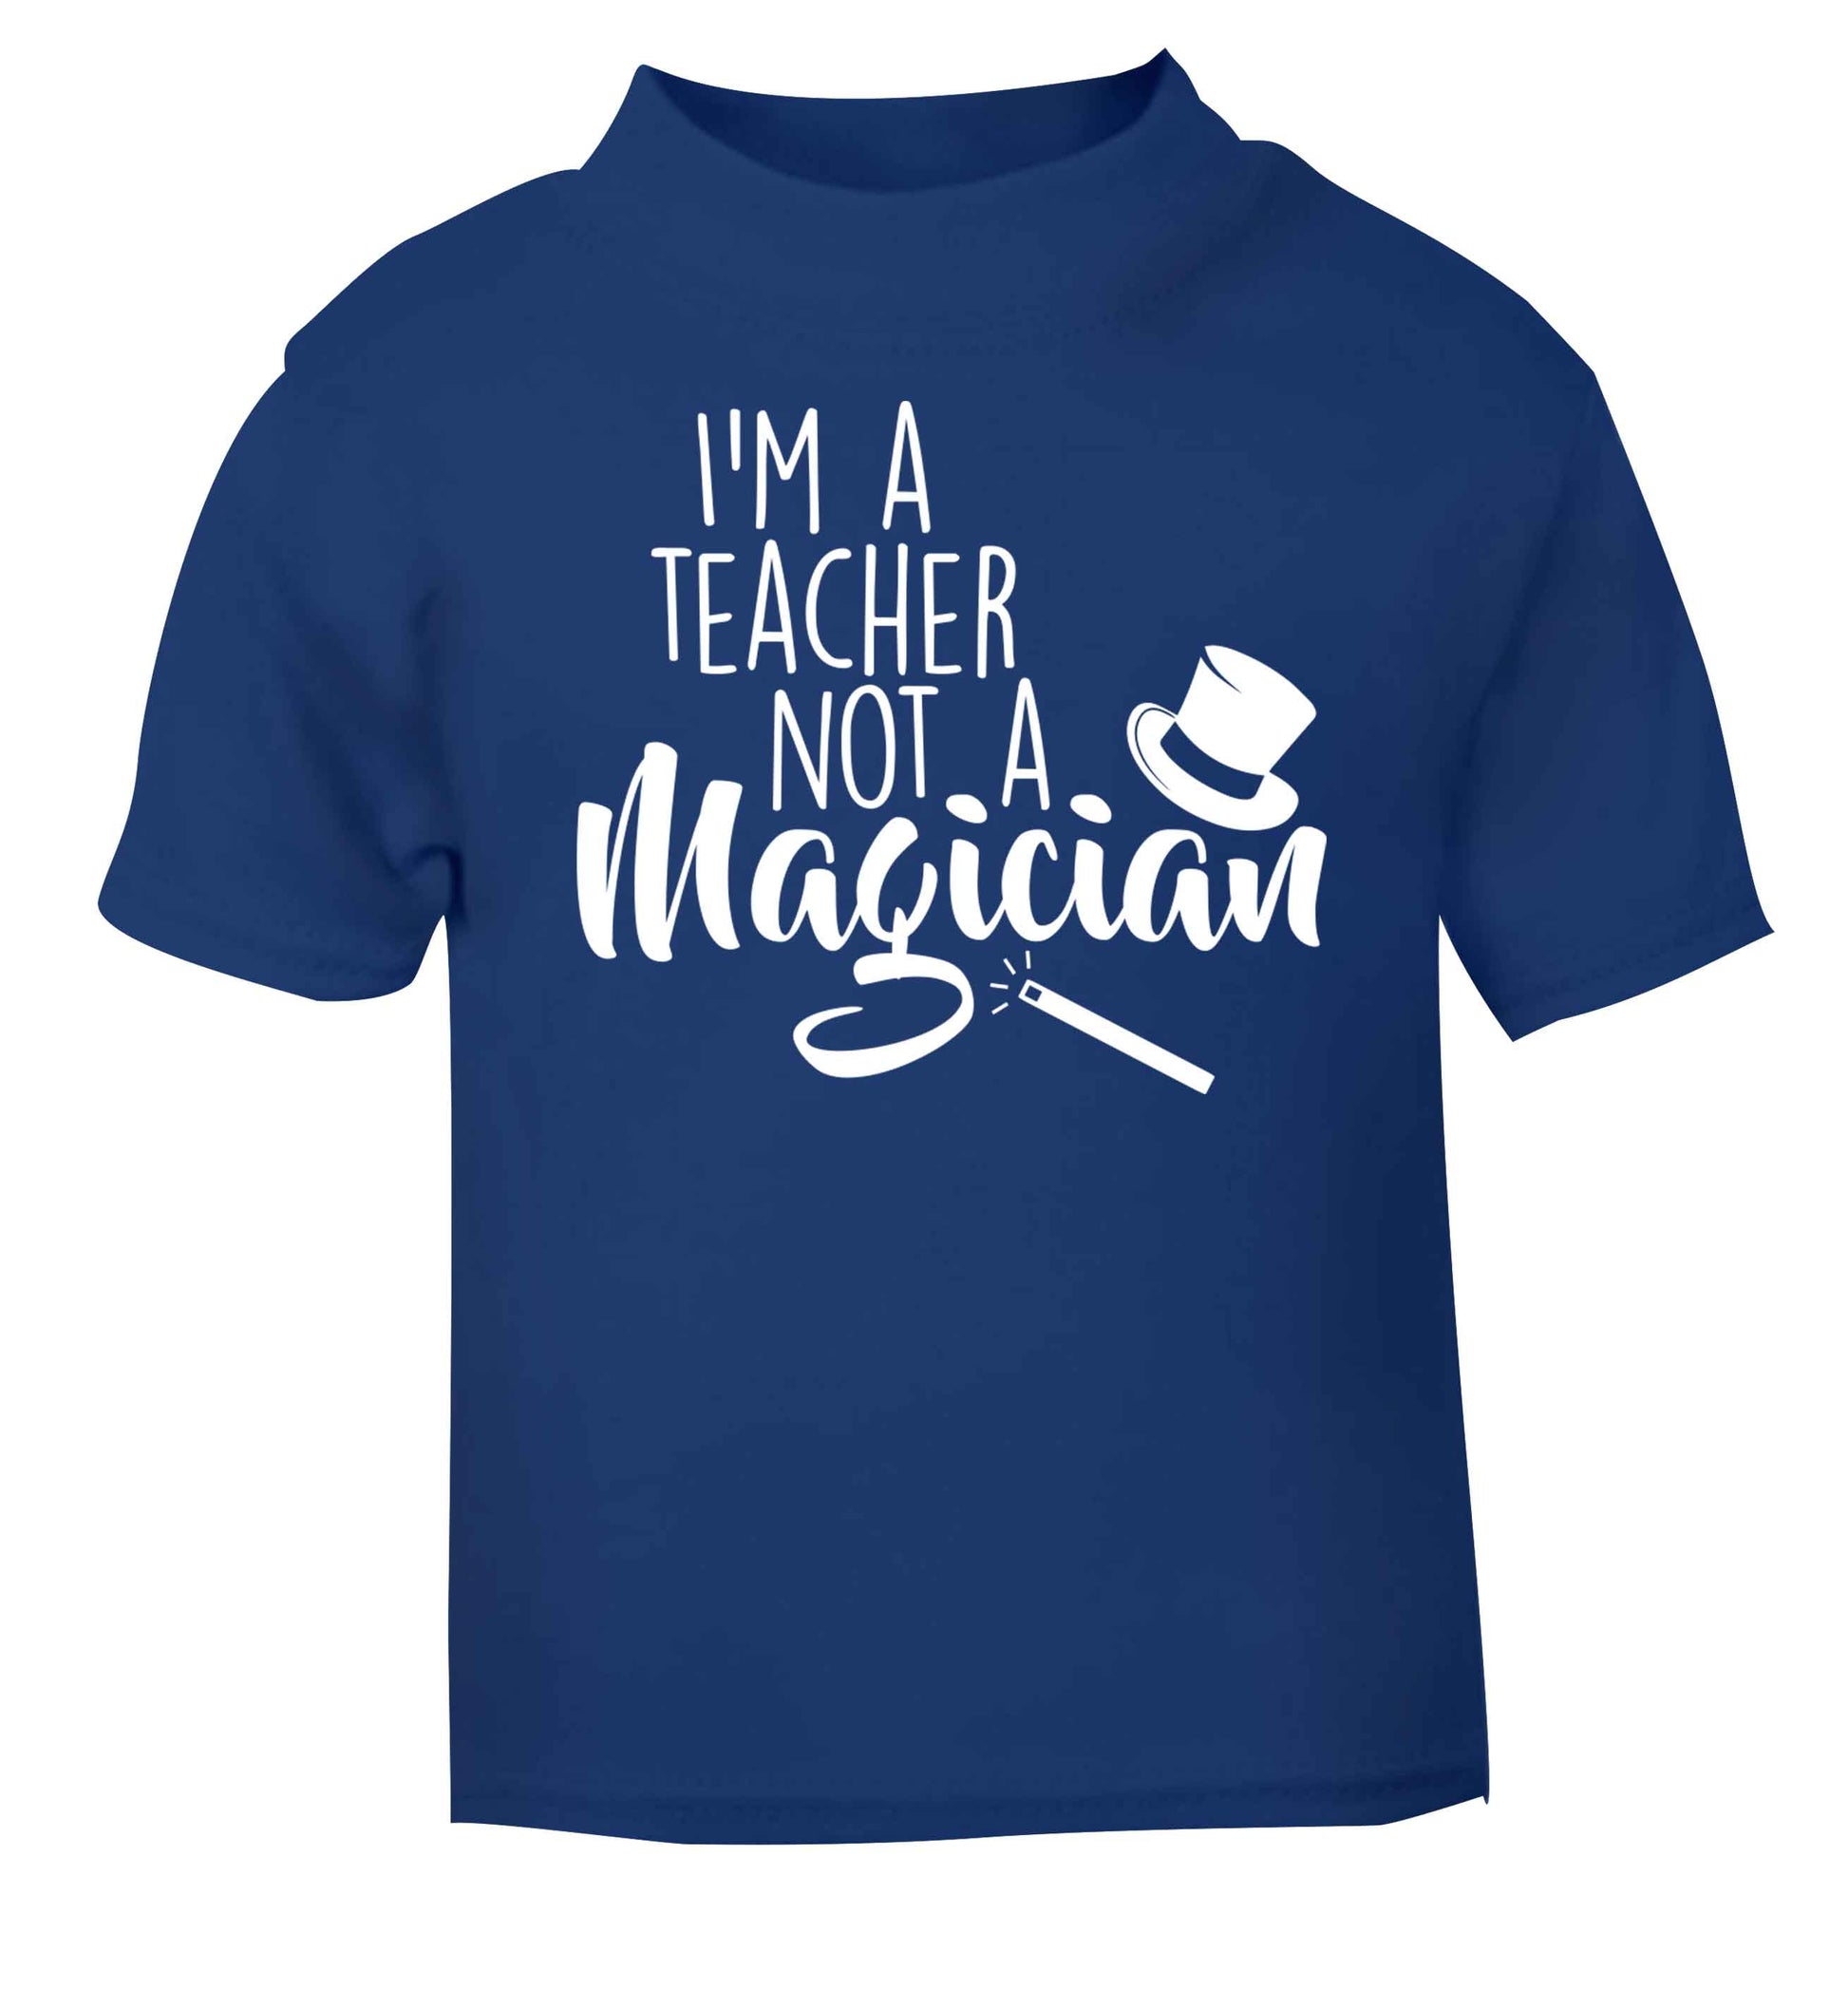 I'm a teacher not a magician blue baby toddler Tshirt 2 Years